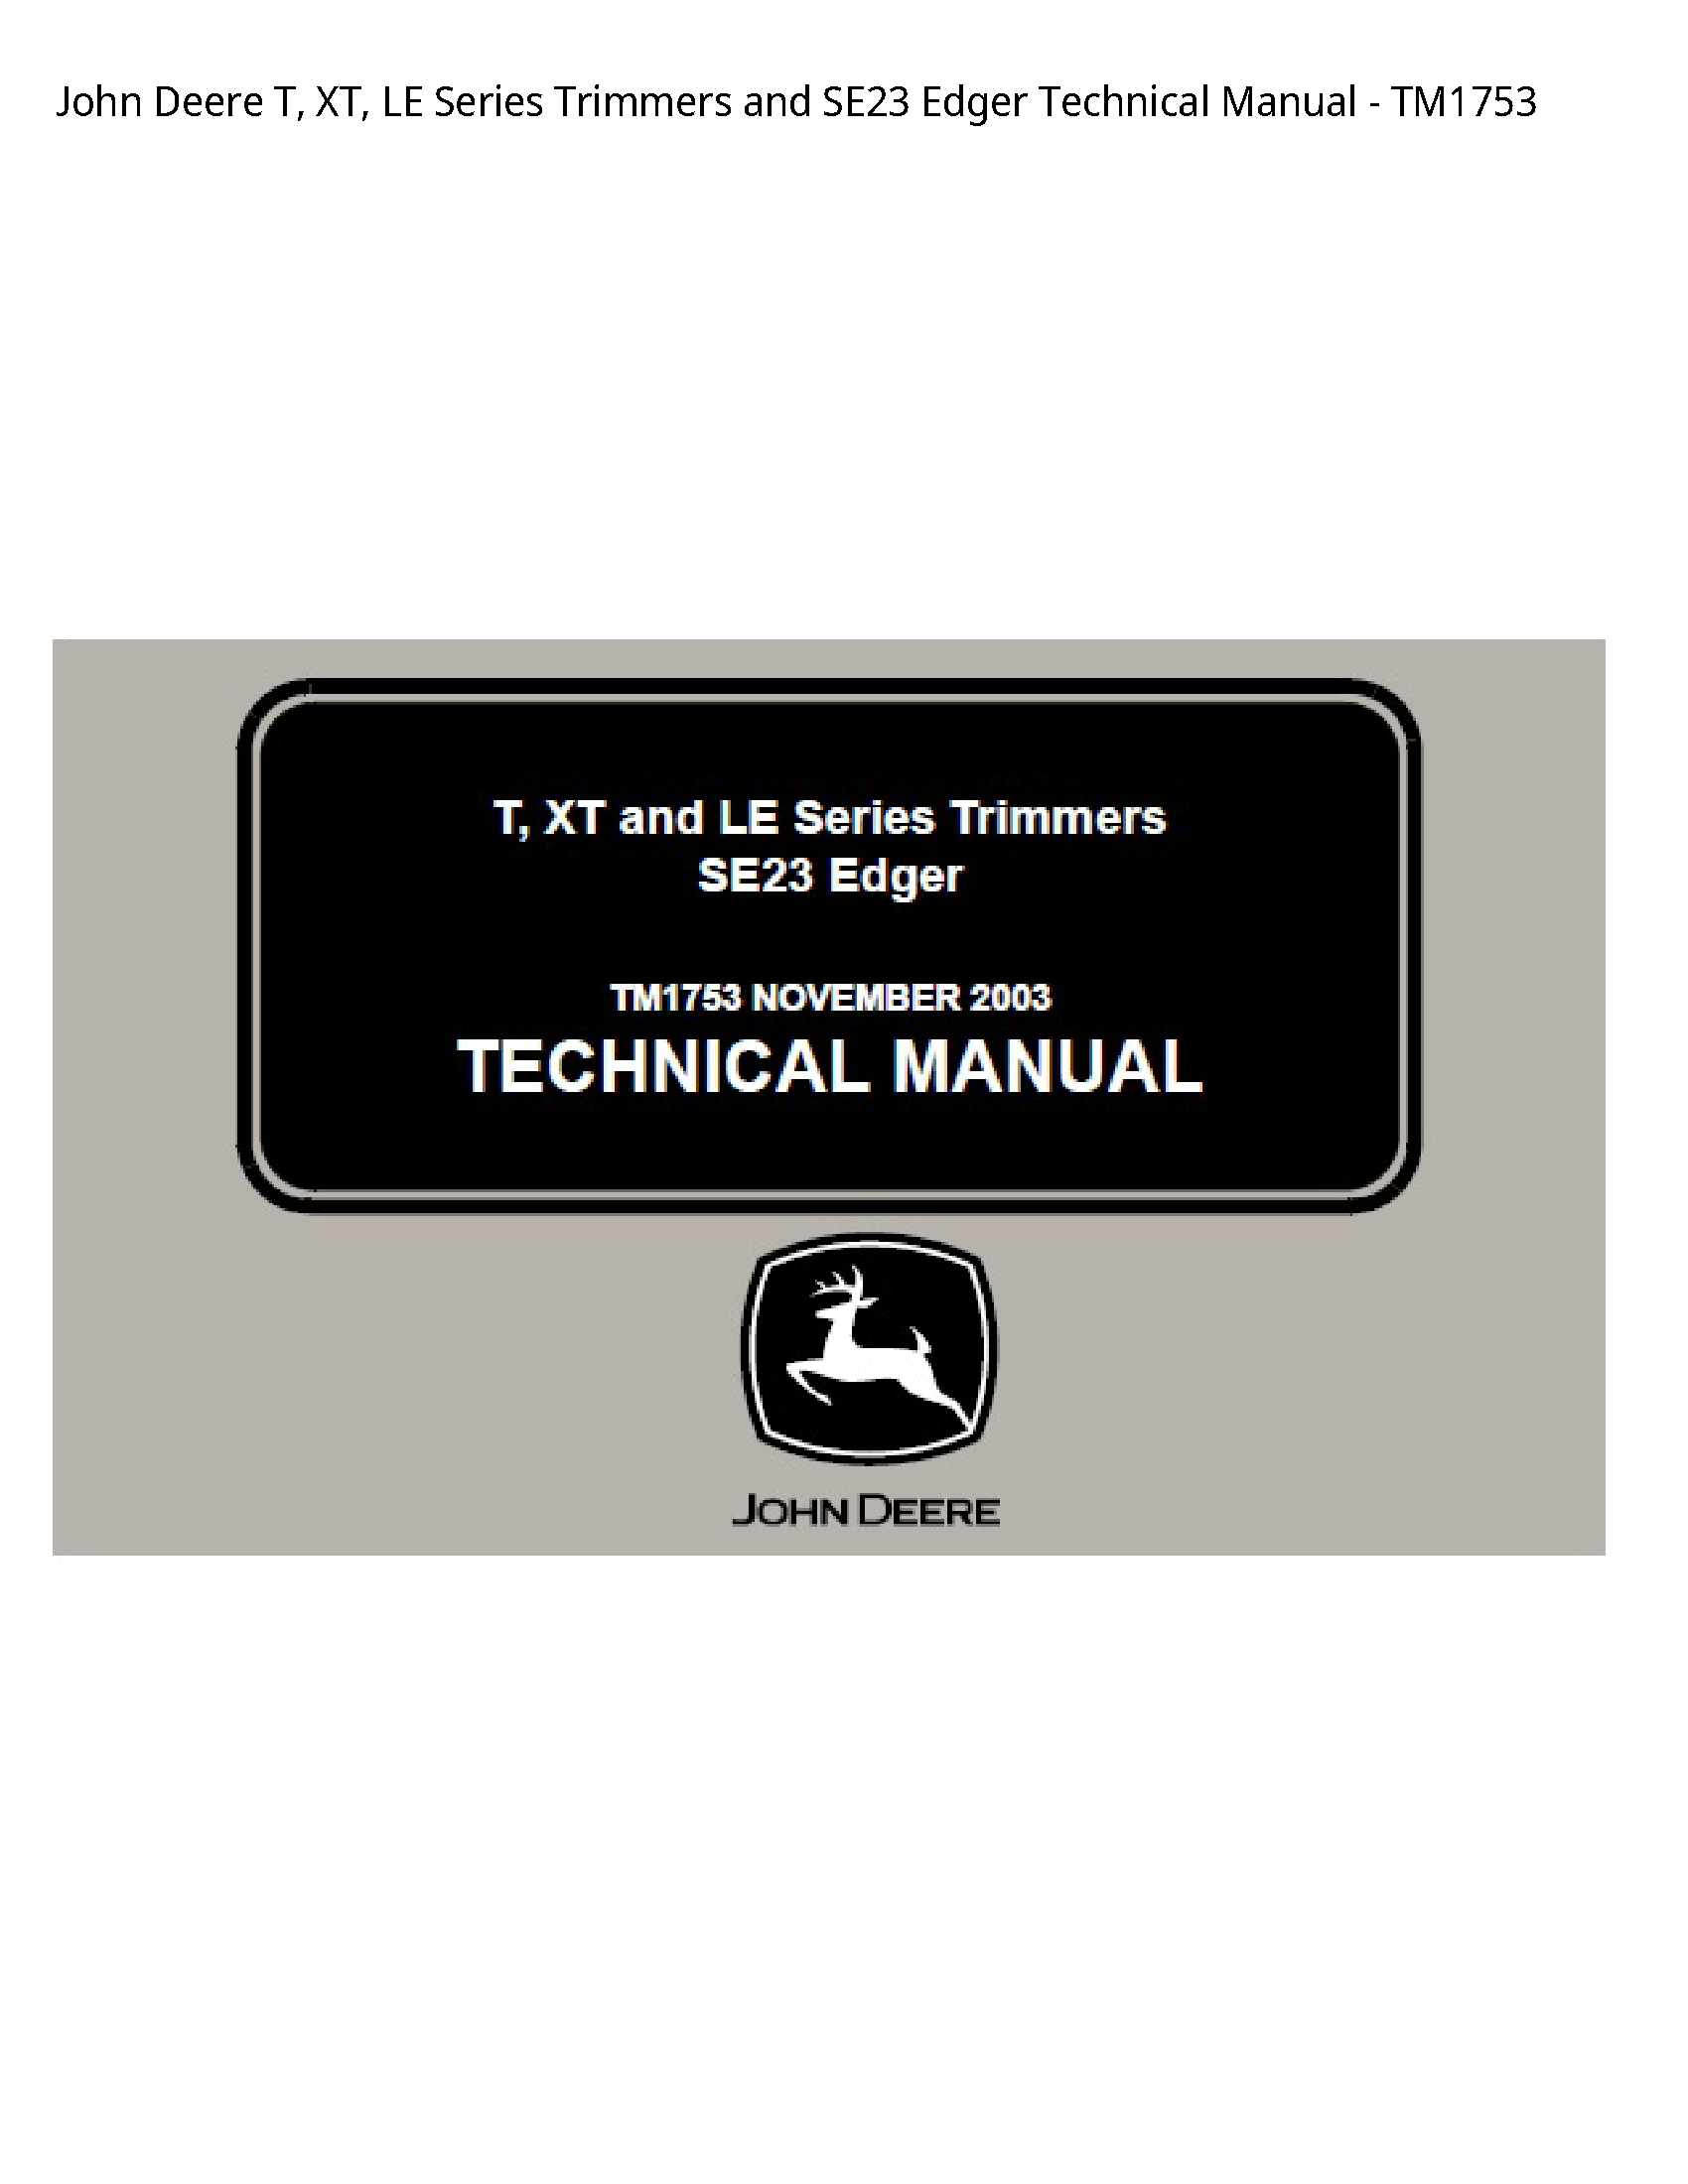 John Deere SE23 T manual